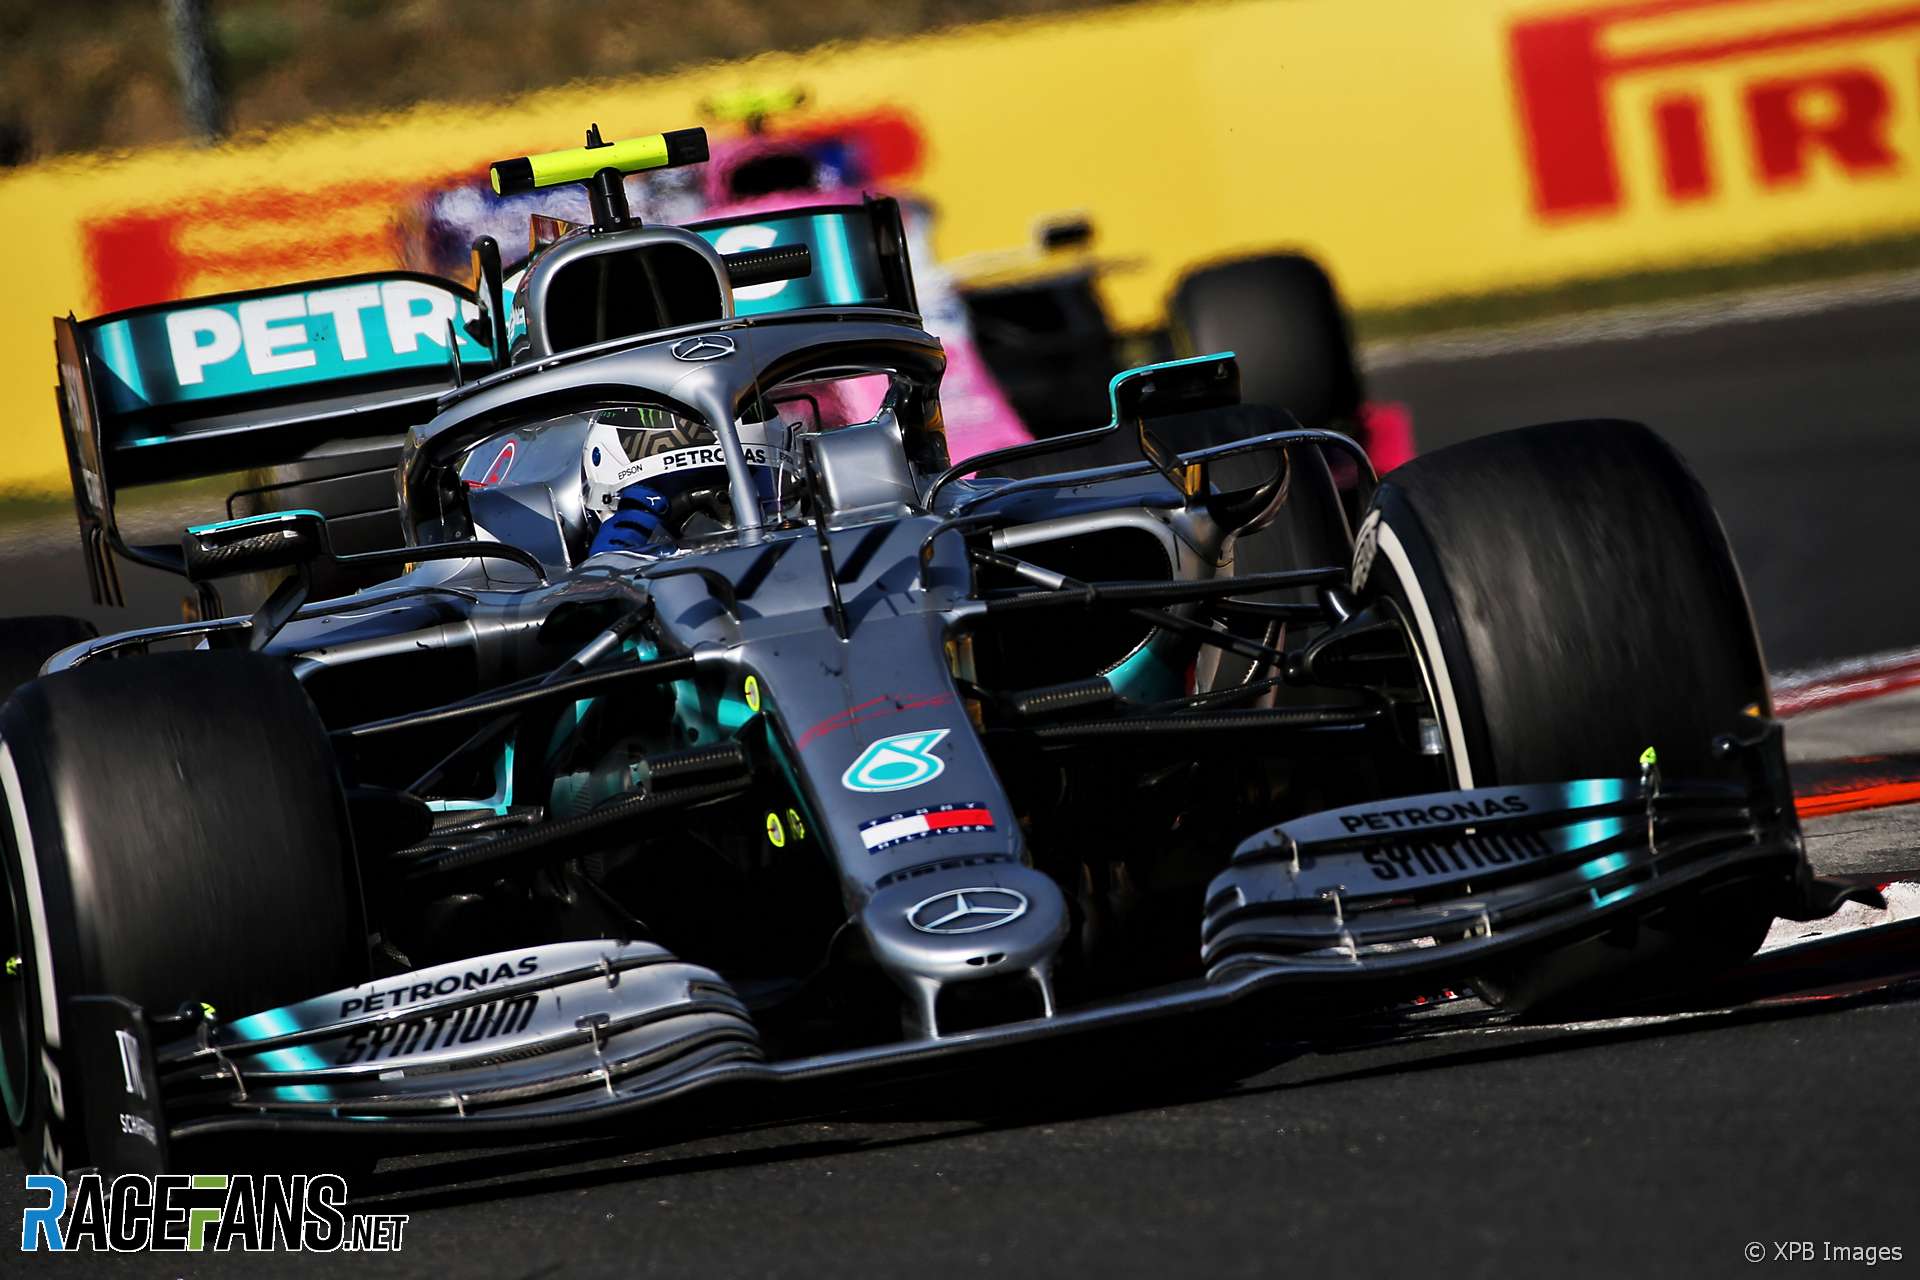 Valtteri Bottas, Mercedes, Hungaroring, 2019